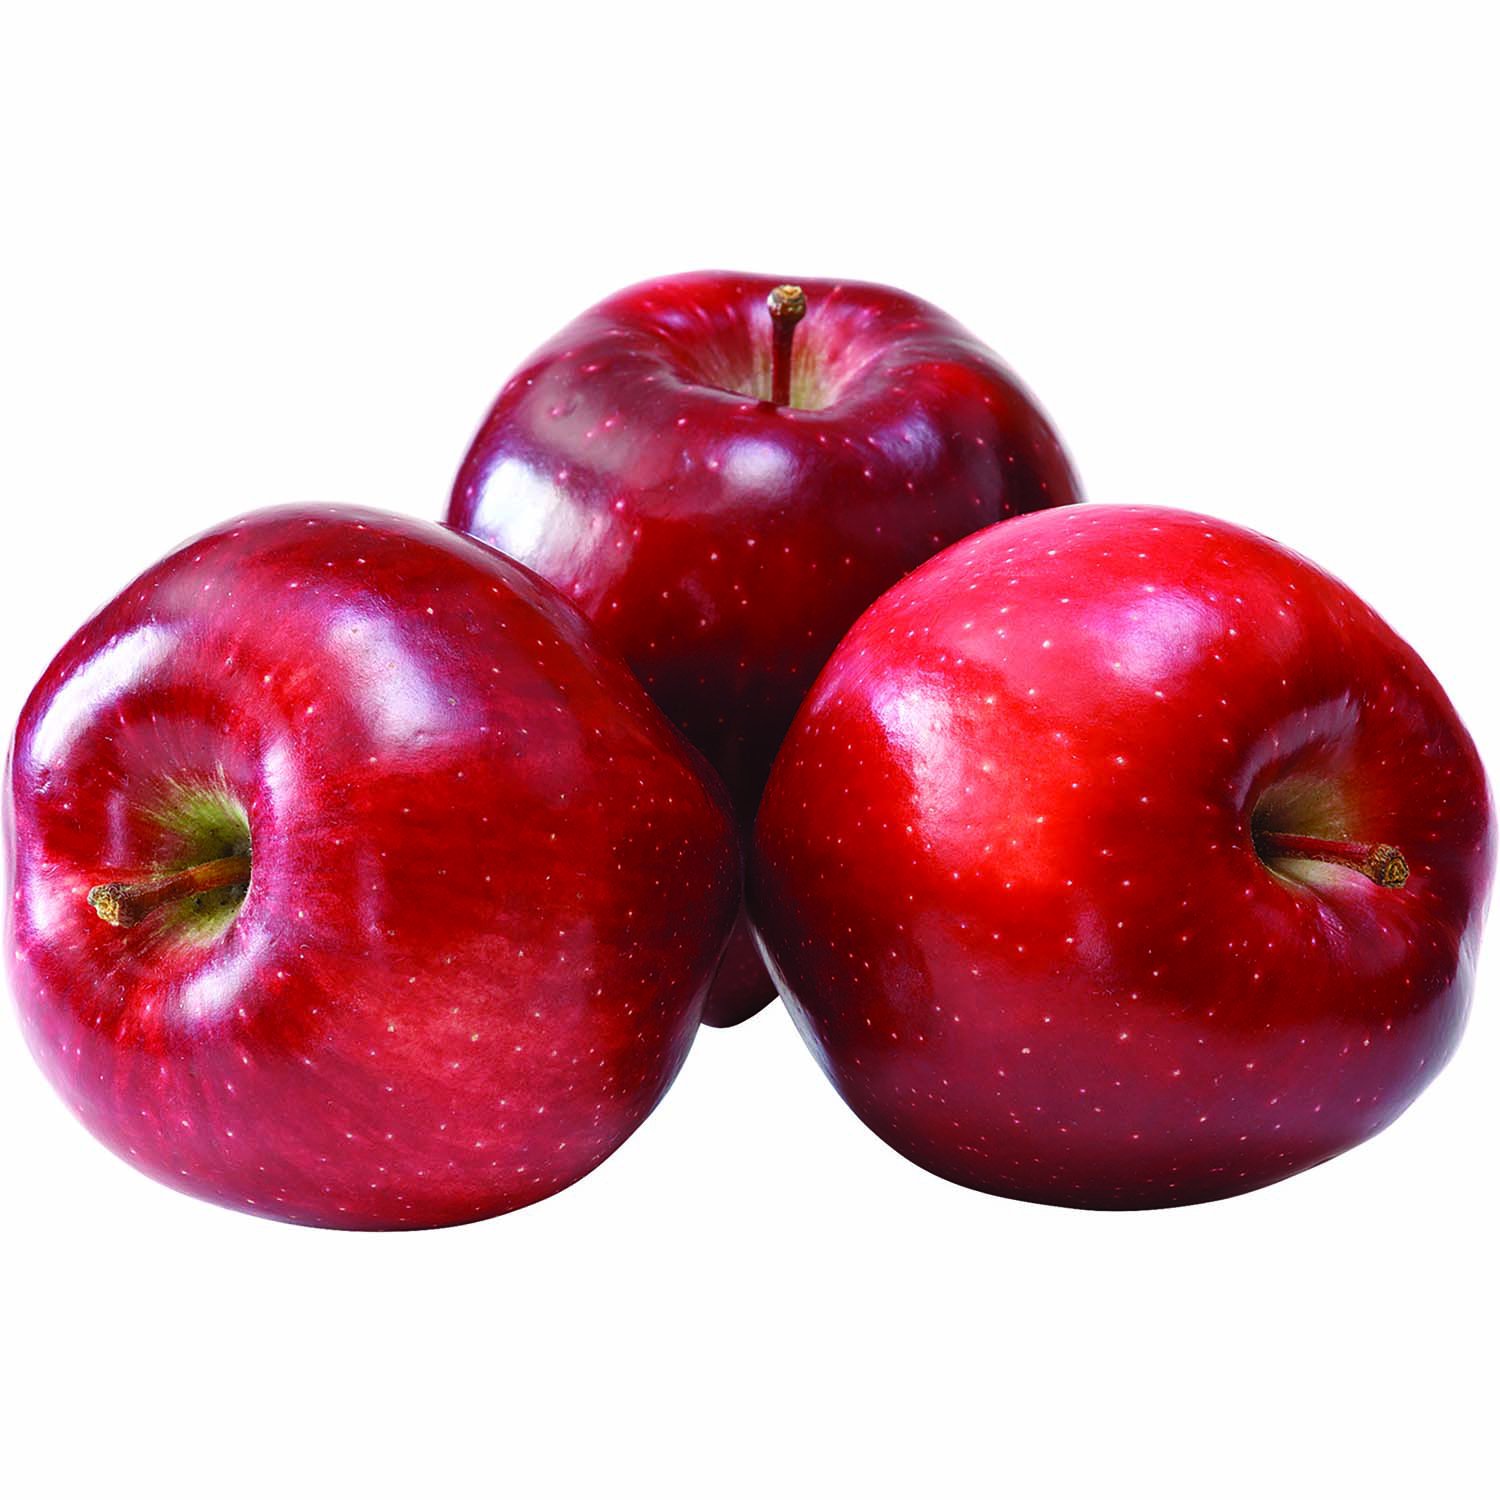 Cosmic Crisp Apples, 3-Pack